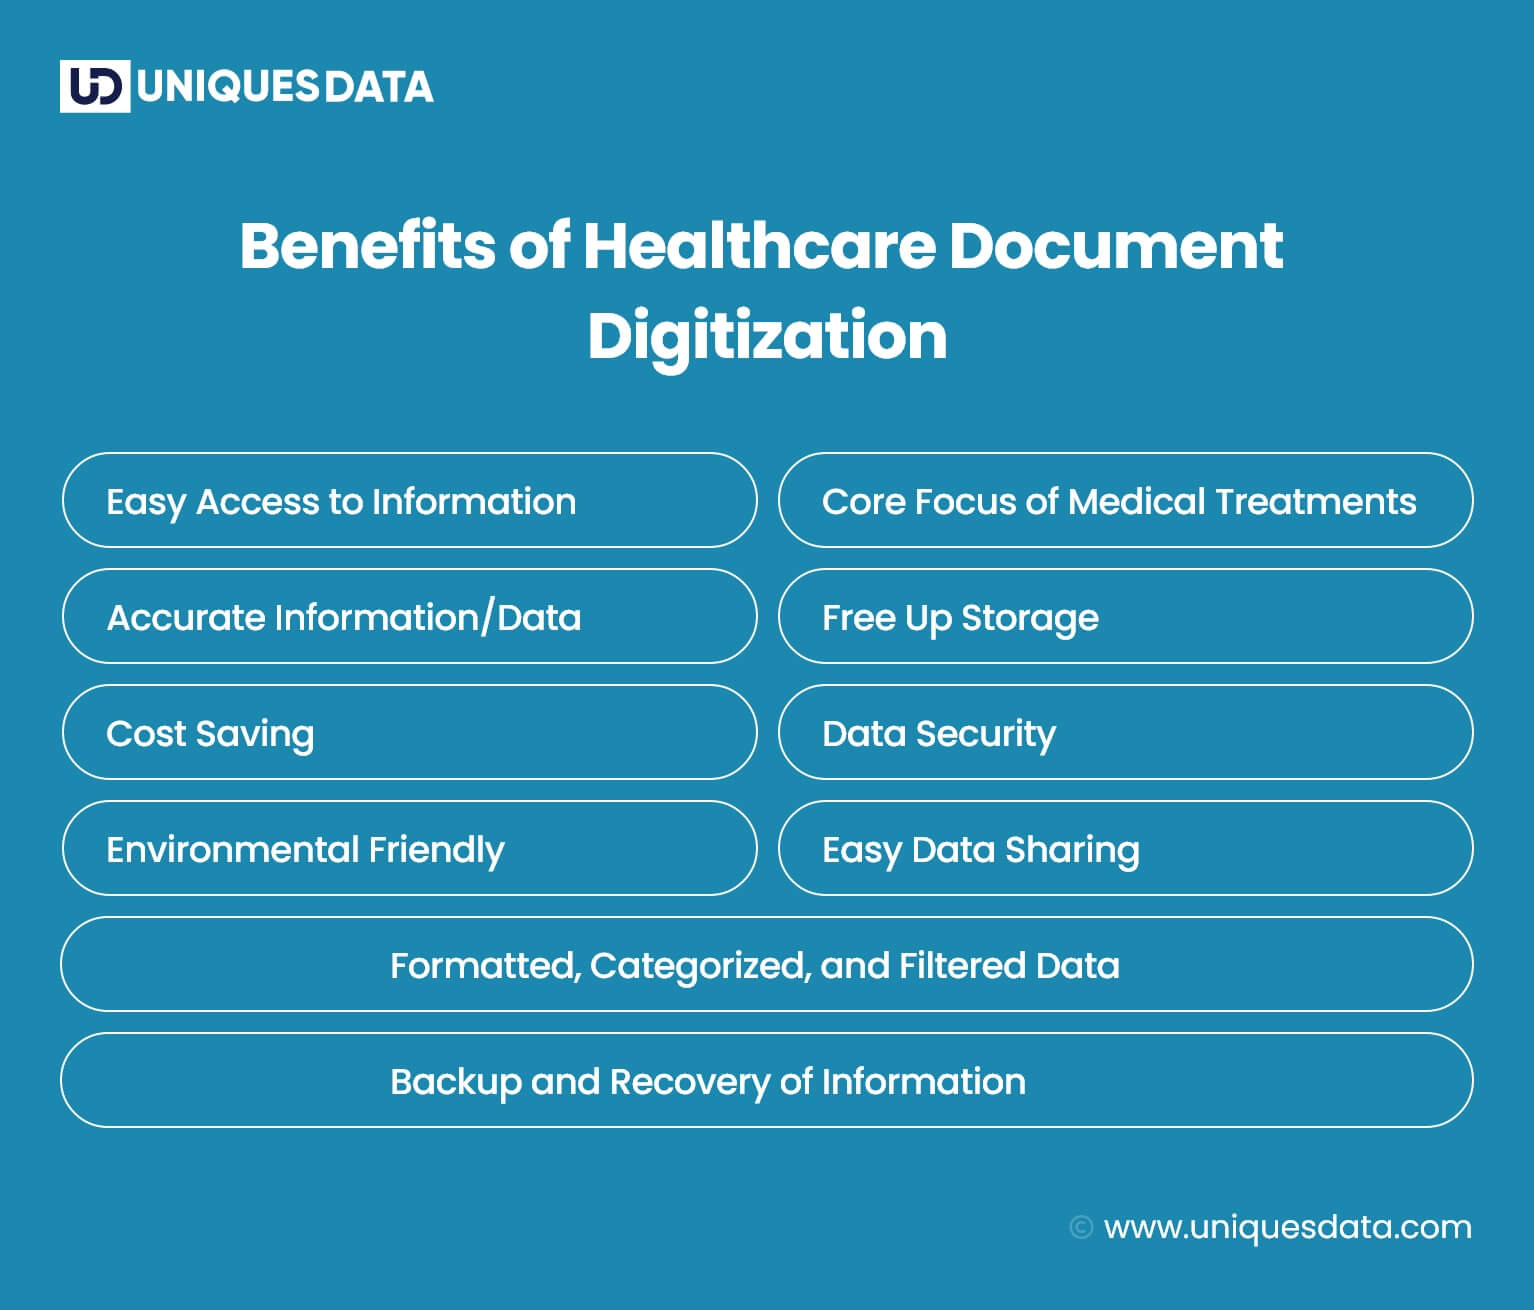 Benefits of Healthcare Document Digitization